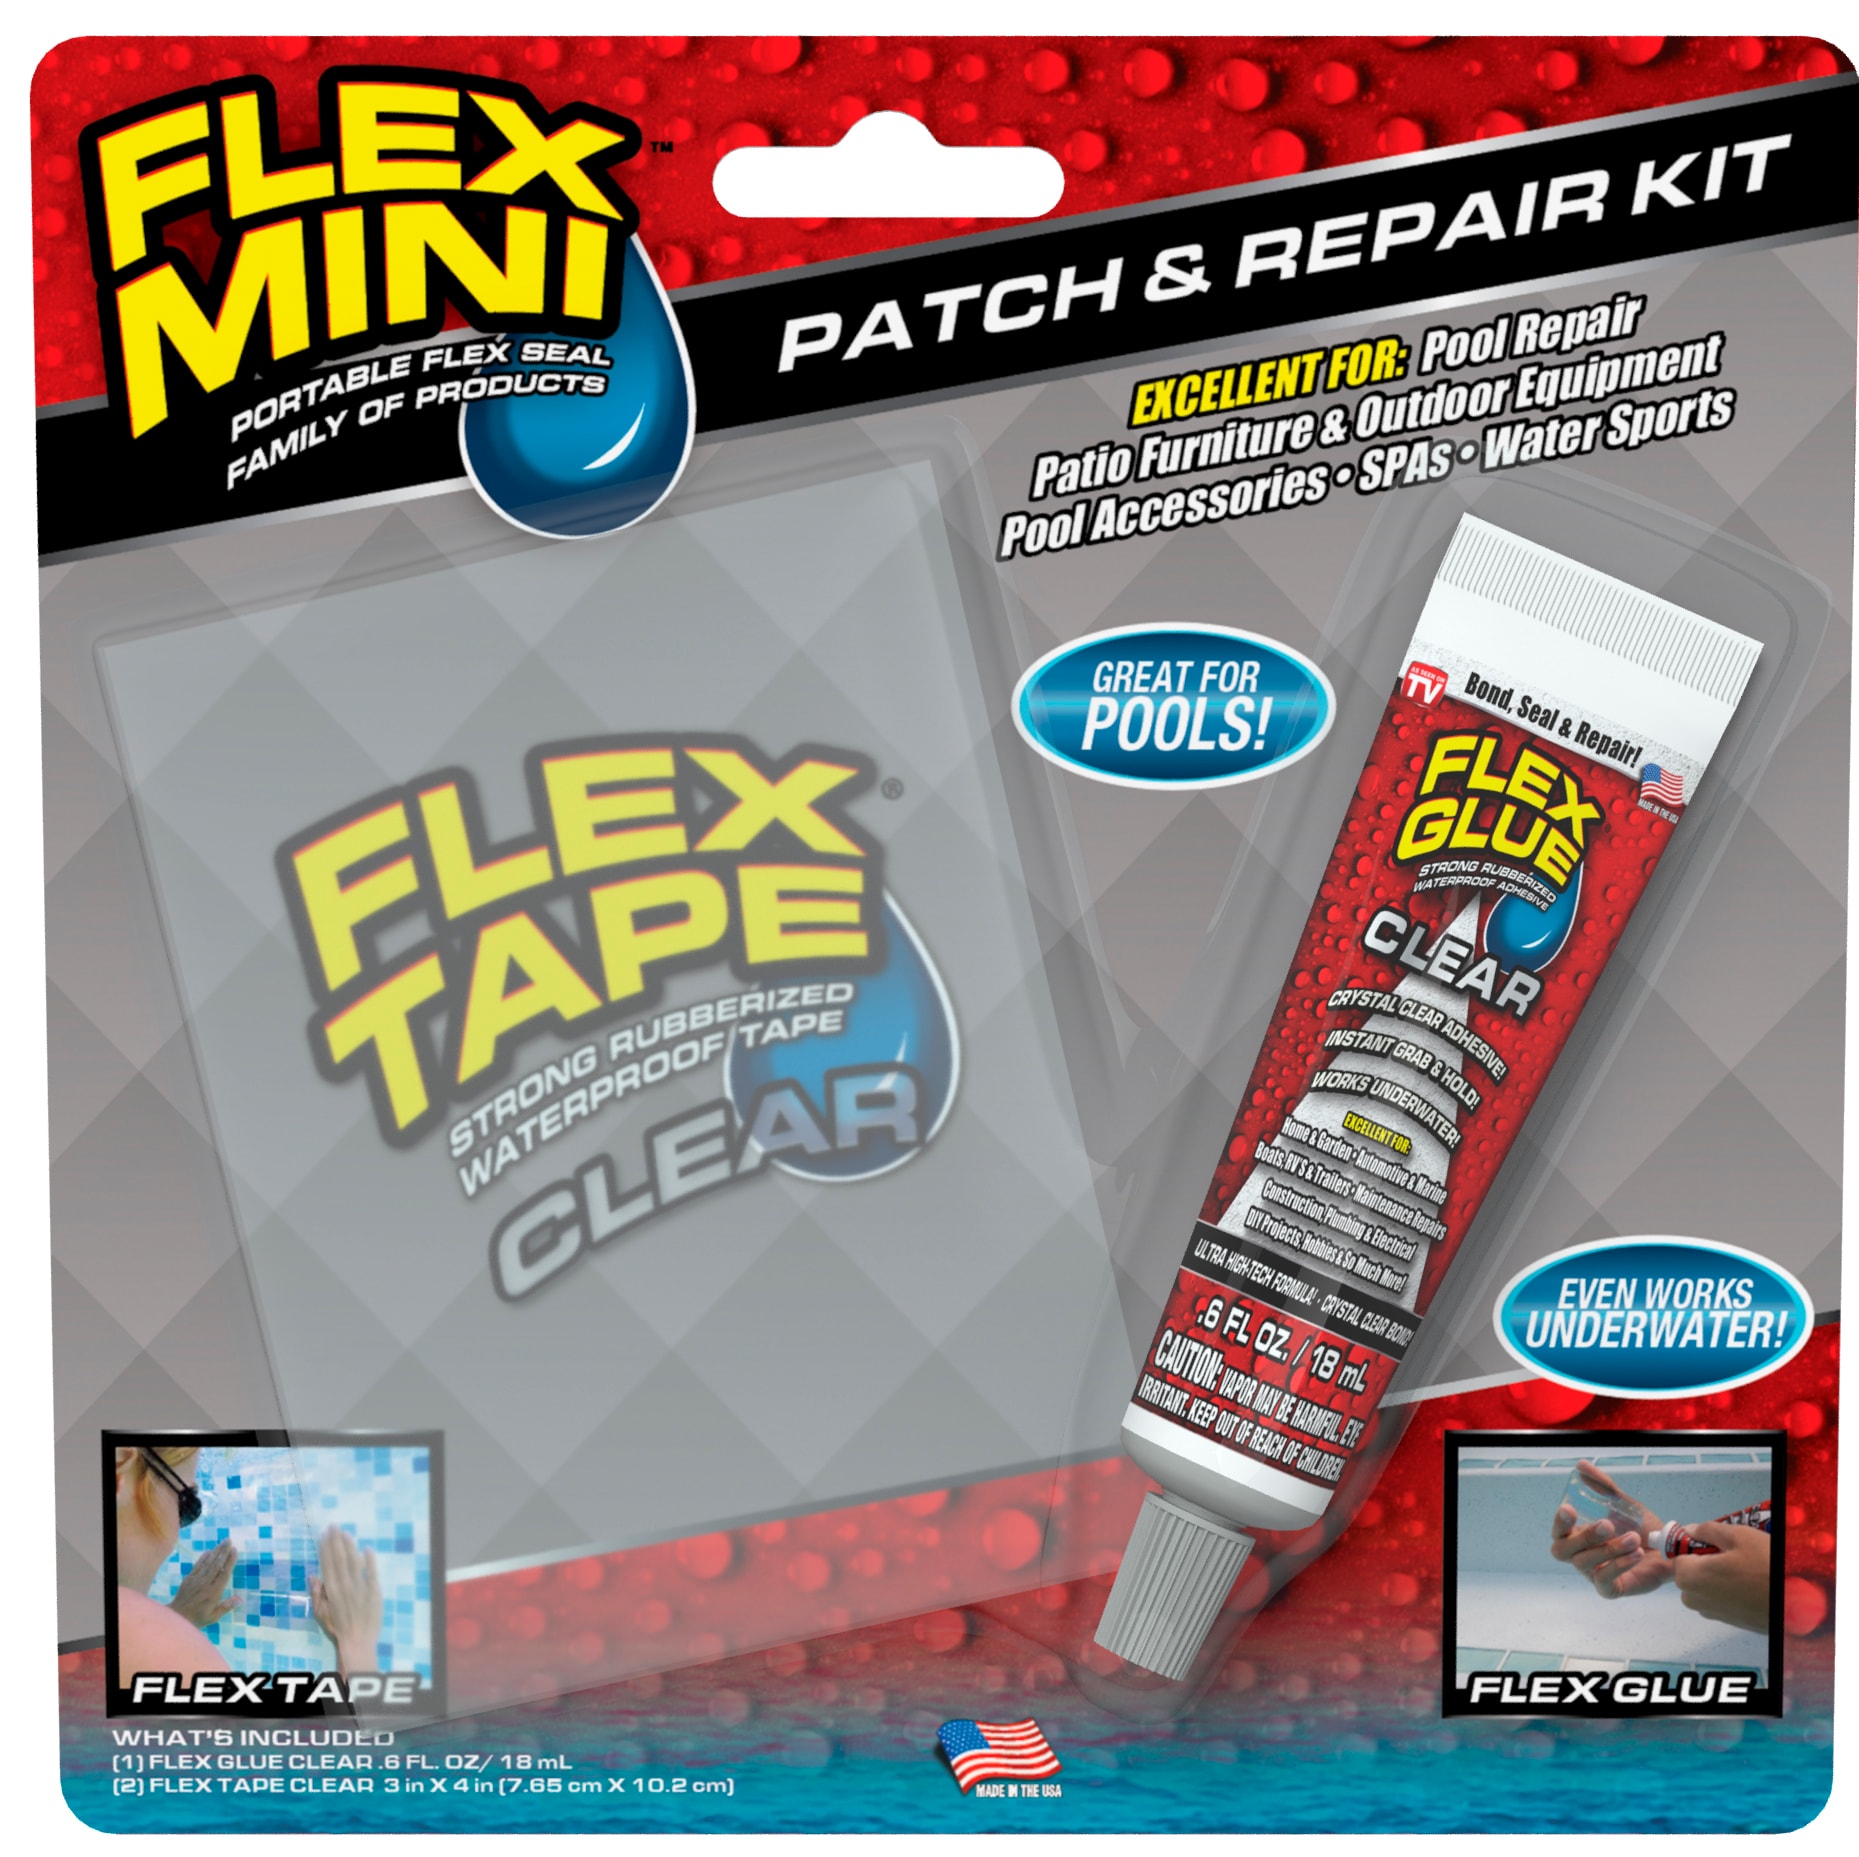 Flex-I-File - Airbrush Cleaning Kit - LAST CAVALRY LLC